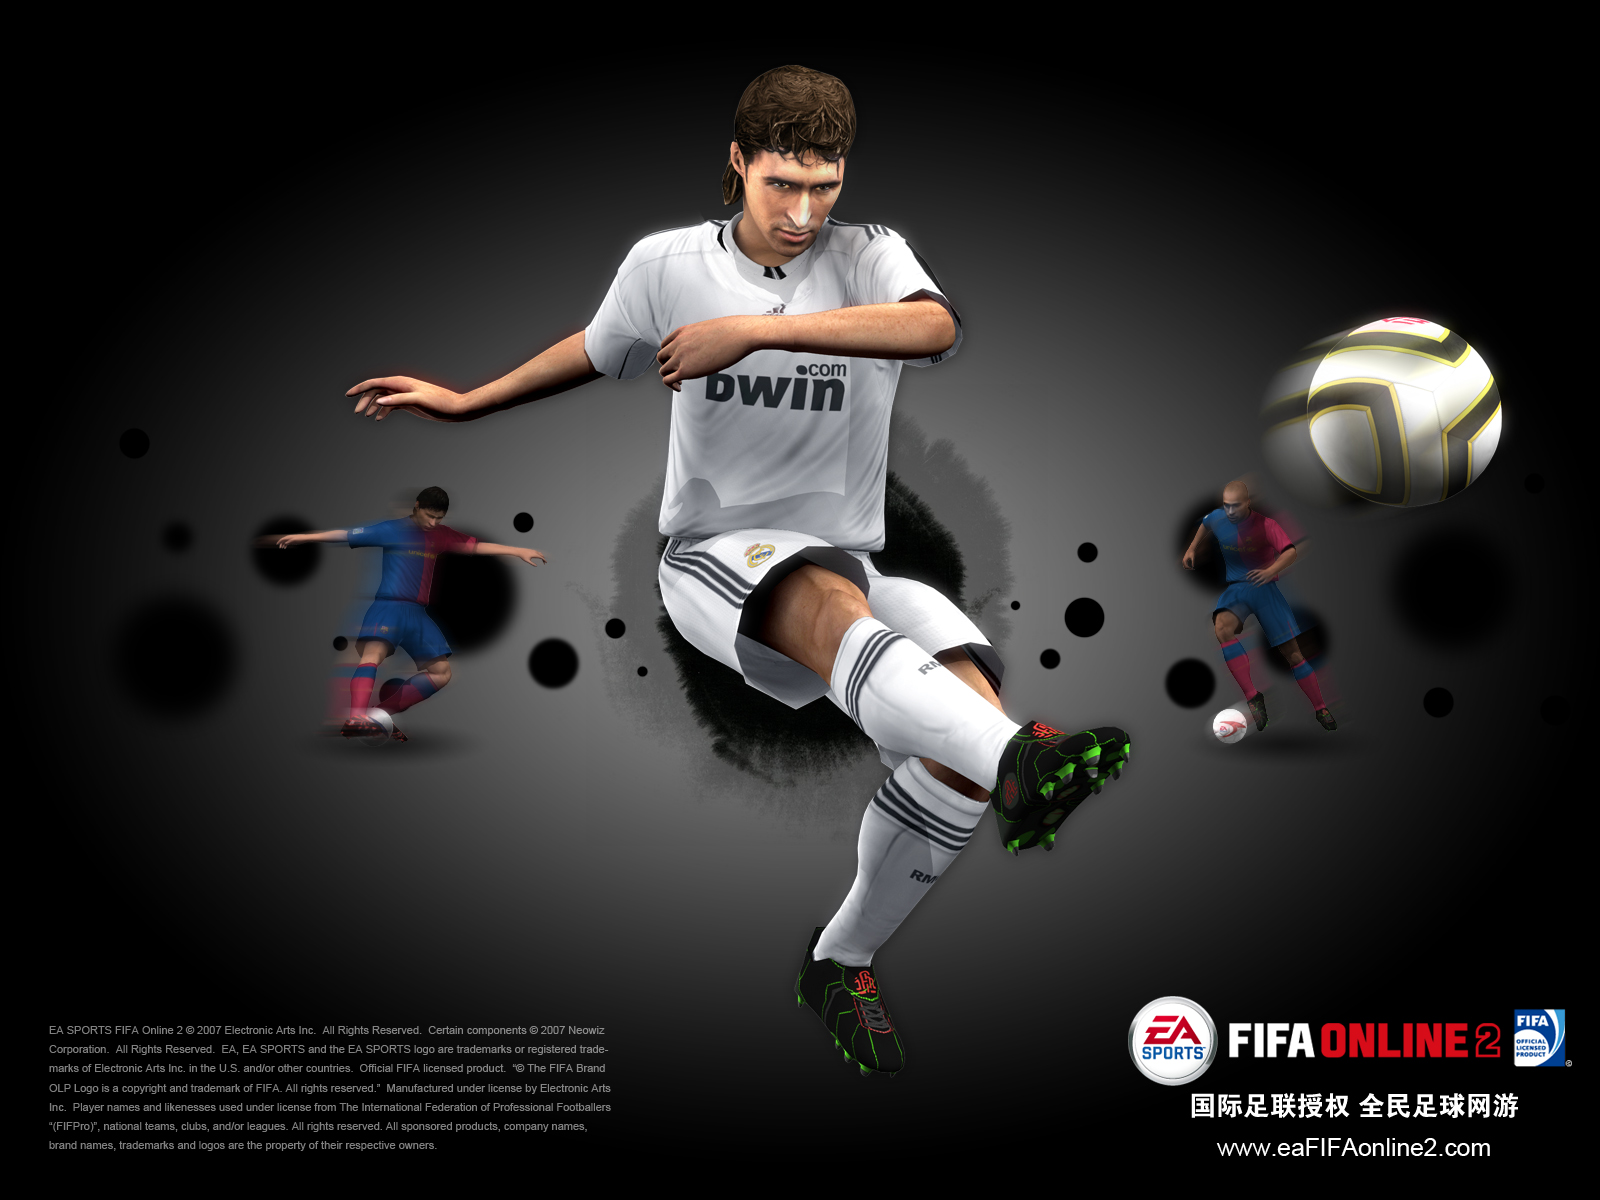 EA SPORTS FIFA Online 2 网络足球游戏(壁纸